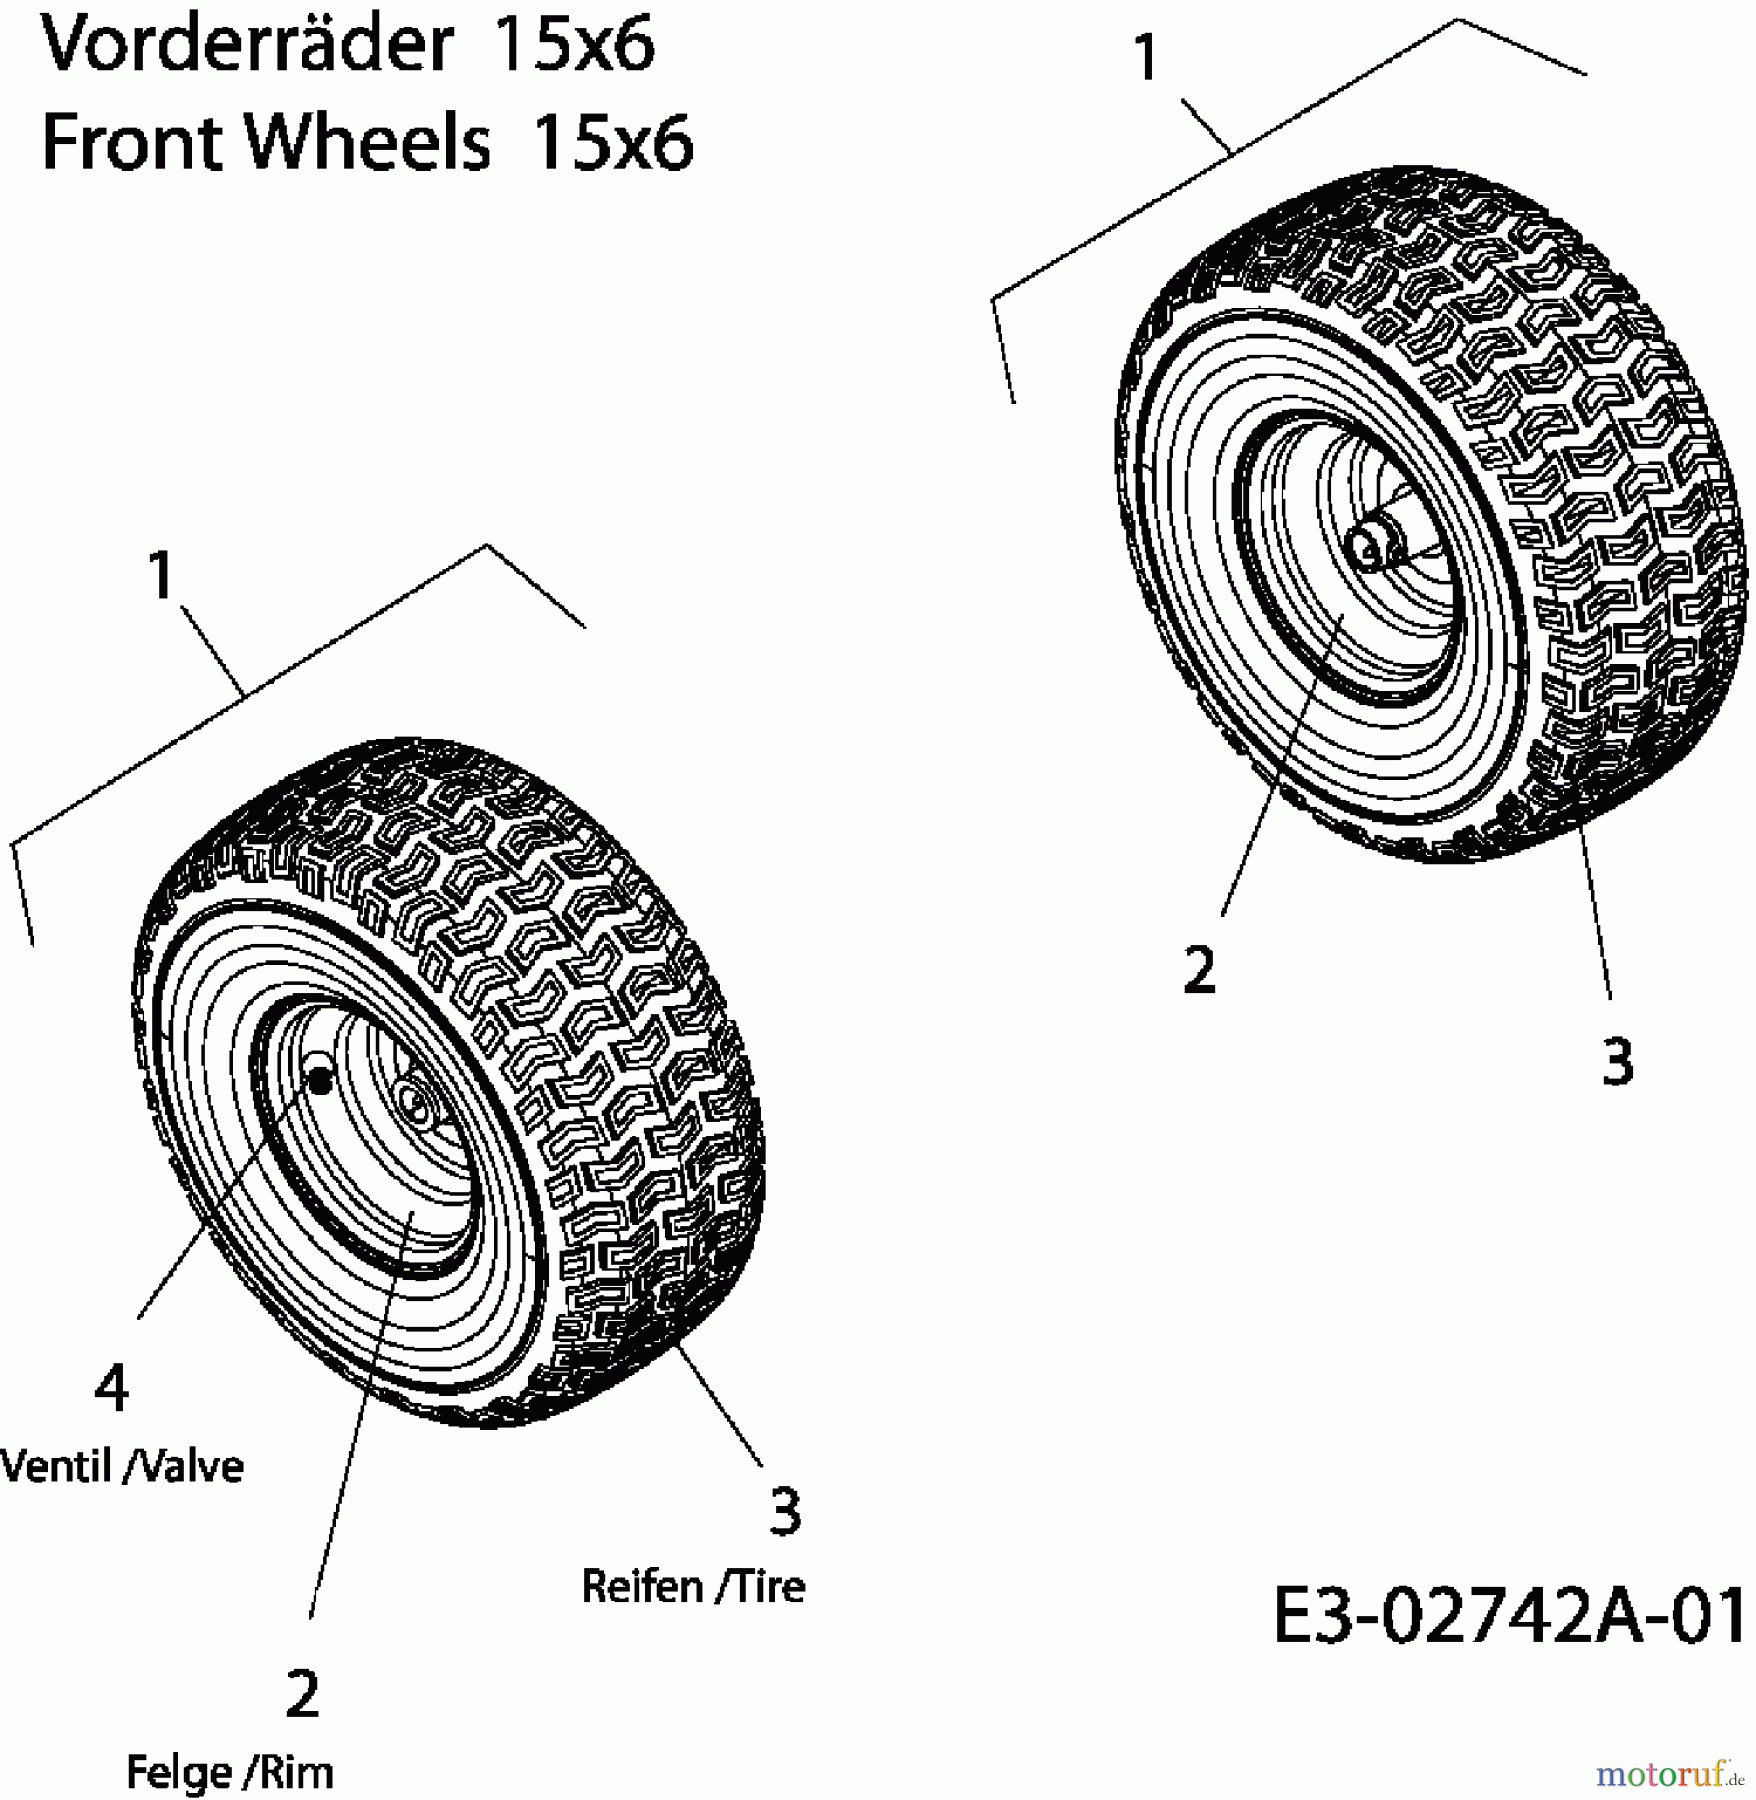  MTD Lawn tractors RS 125/96 13A1762F600  (2006) Front wheels